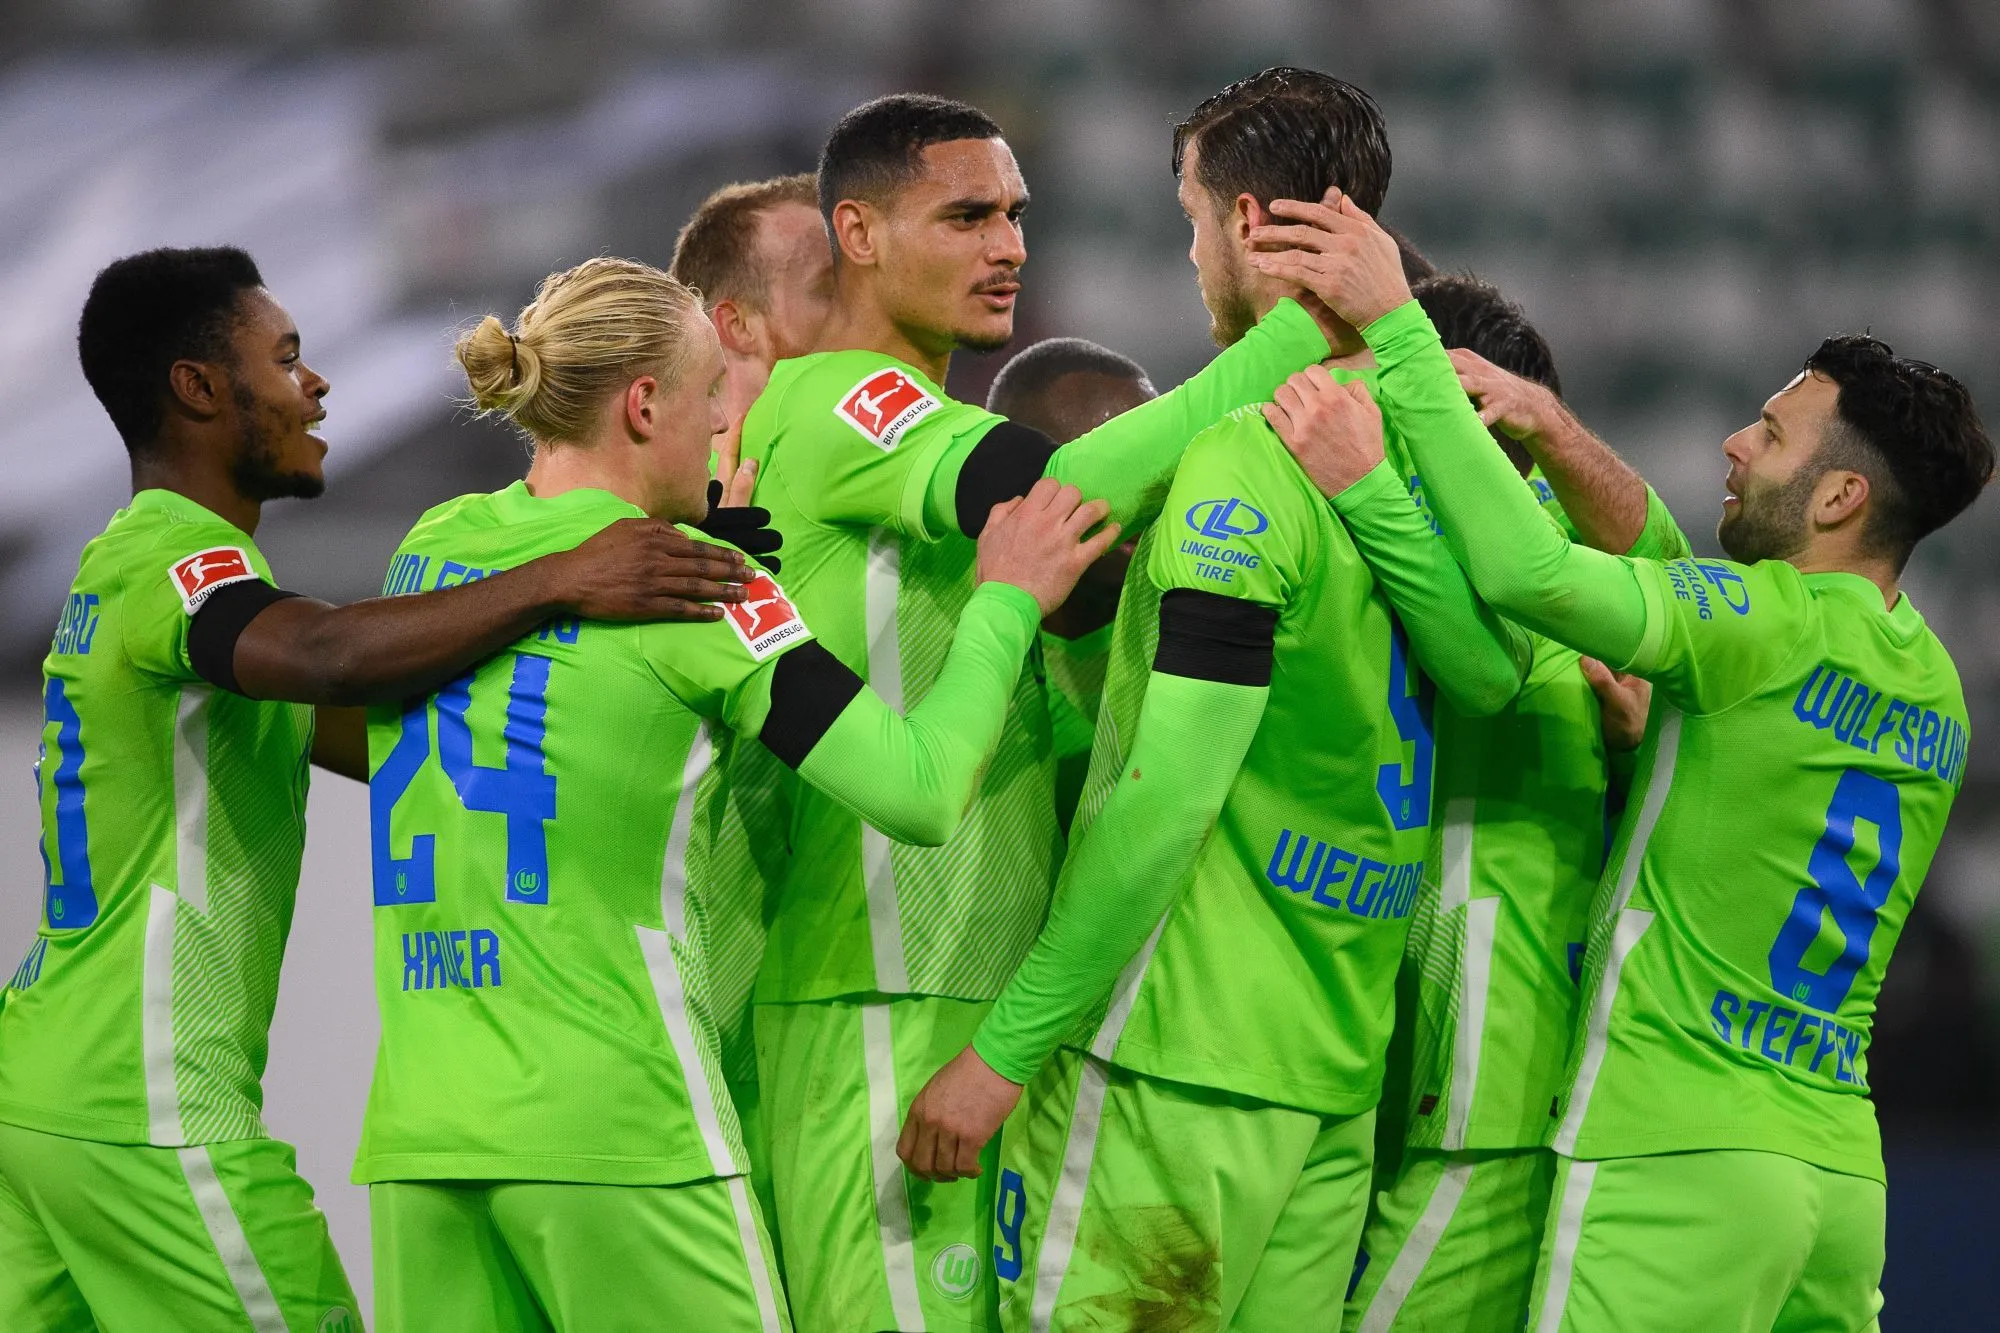 Pronostic Wolfsbourg Eintracht Francfort : Analyse, cotes et prono du match de Bundesliga